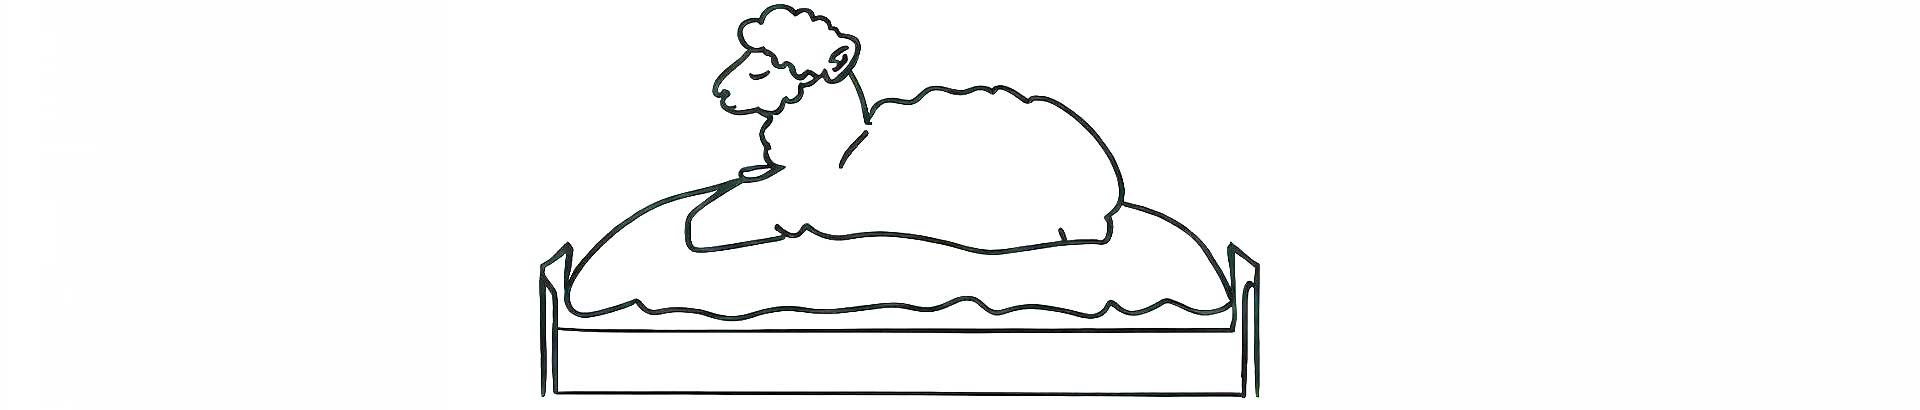 Line drawing illustrating the temperature-regulating properties of alpaca wool